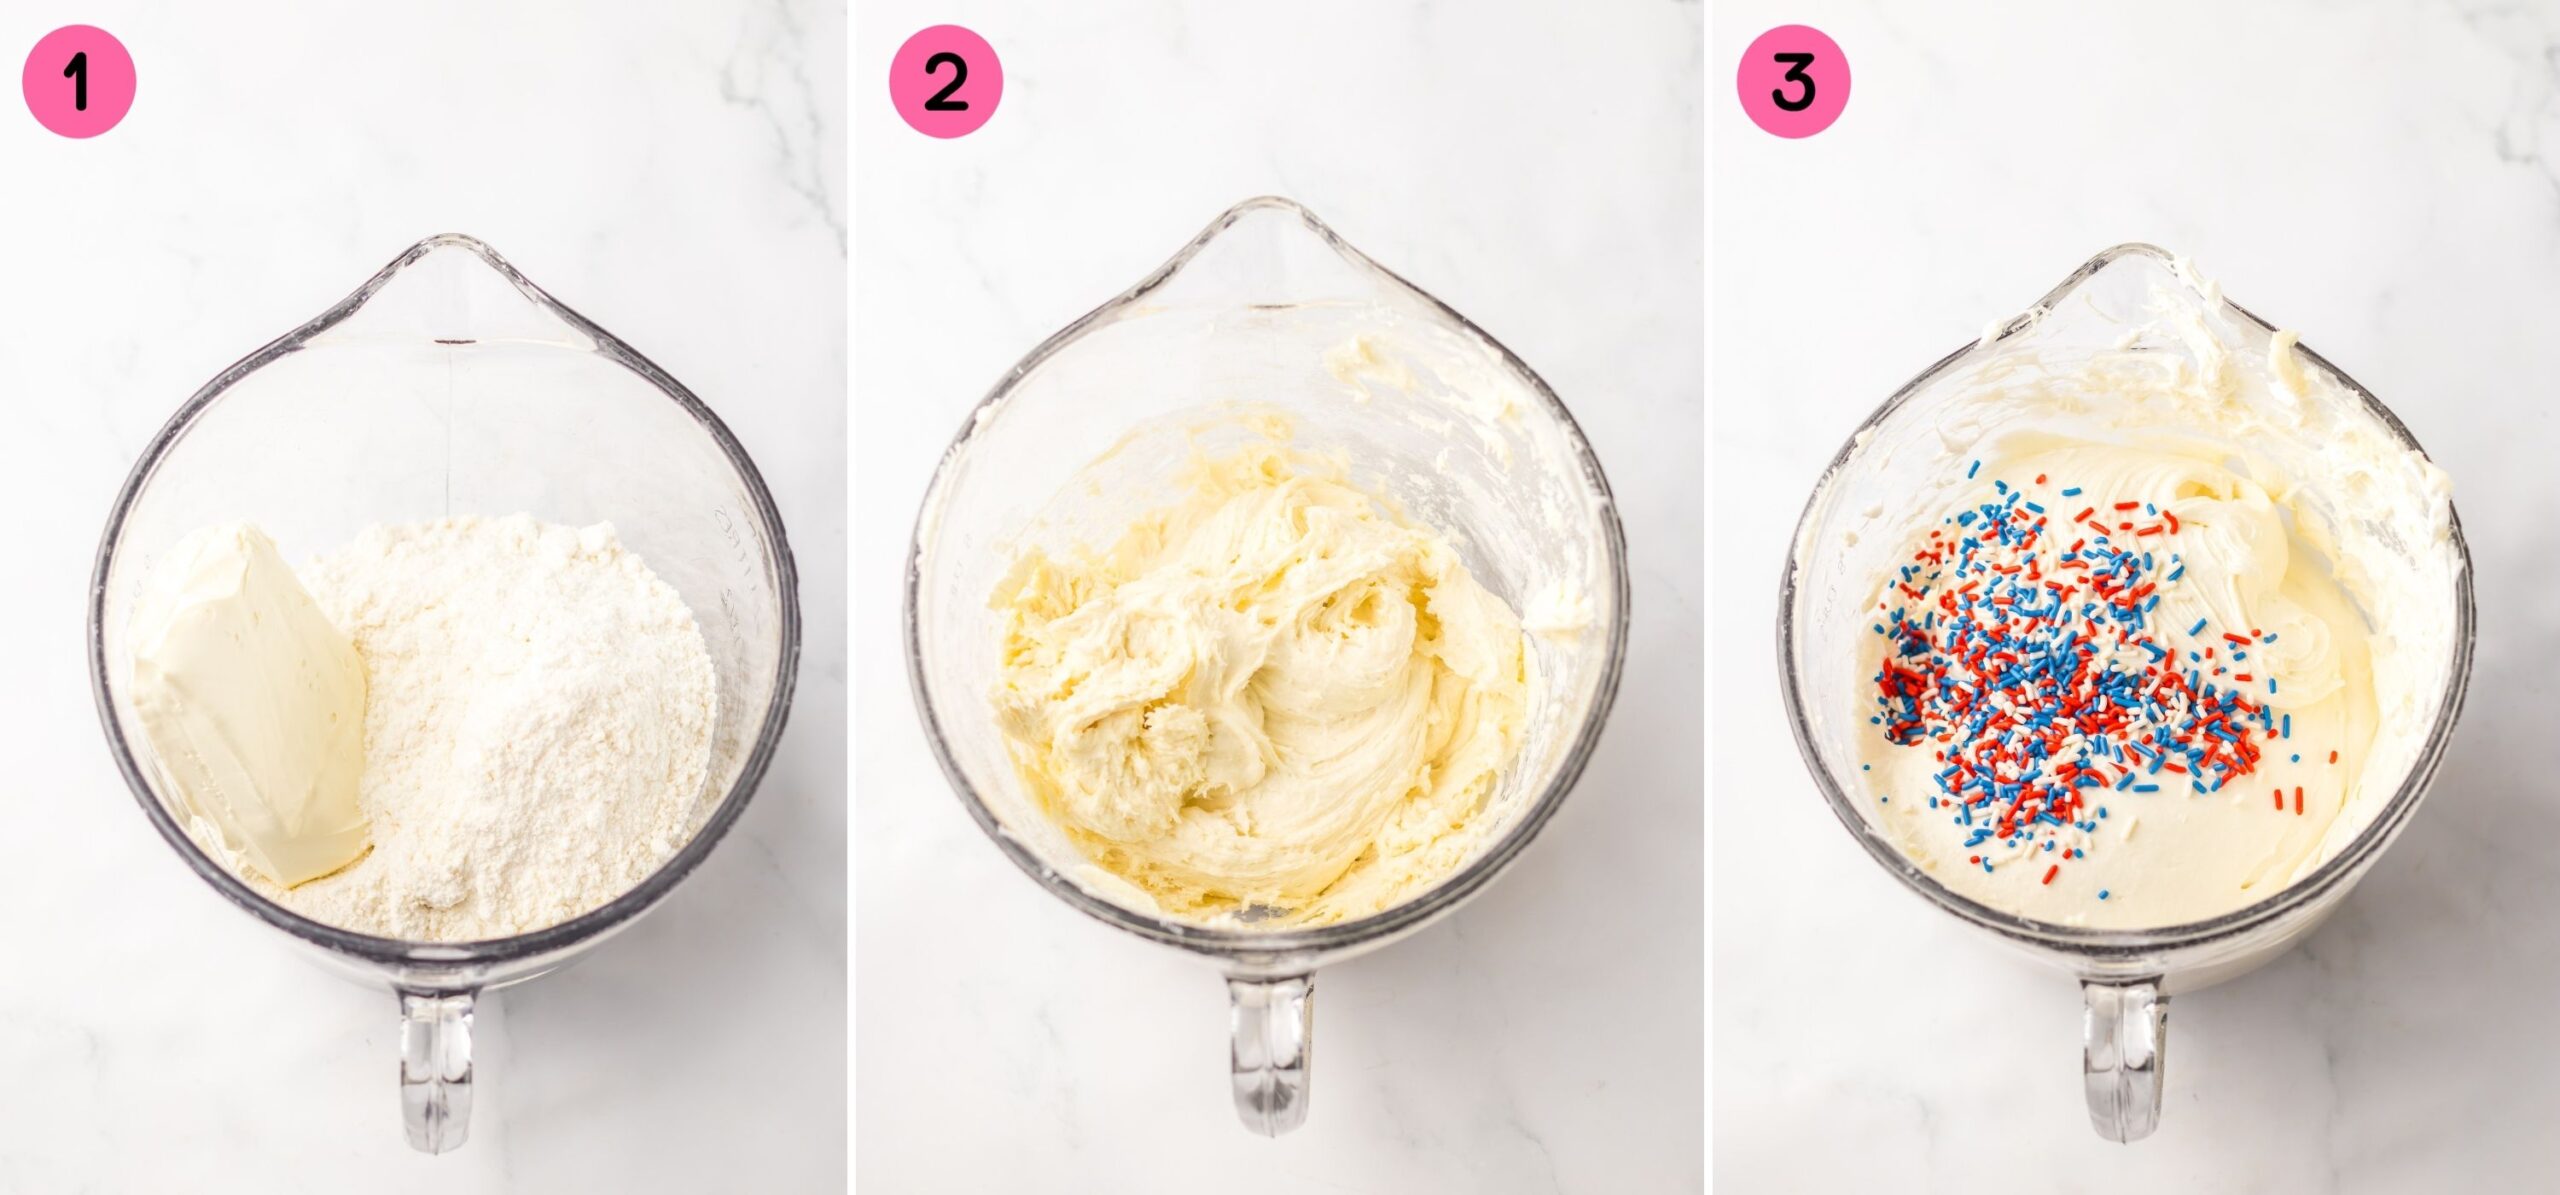 How to make cake batter dip recipe.